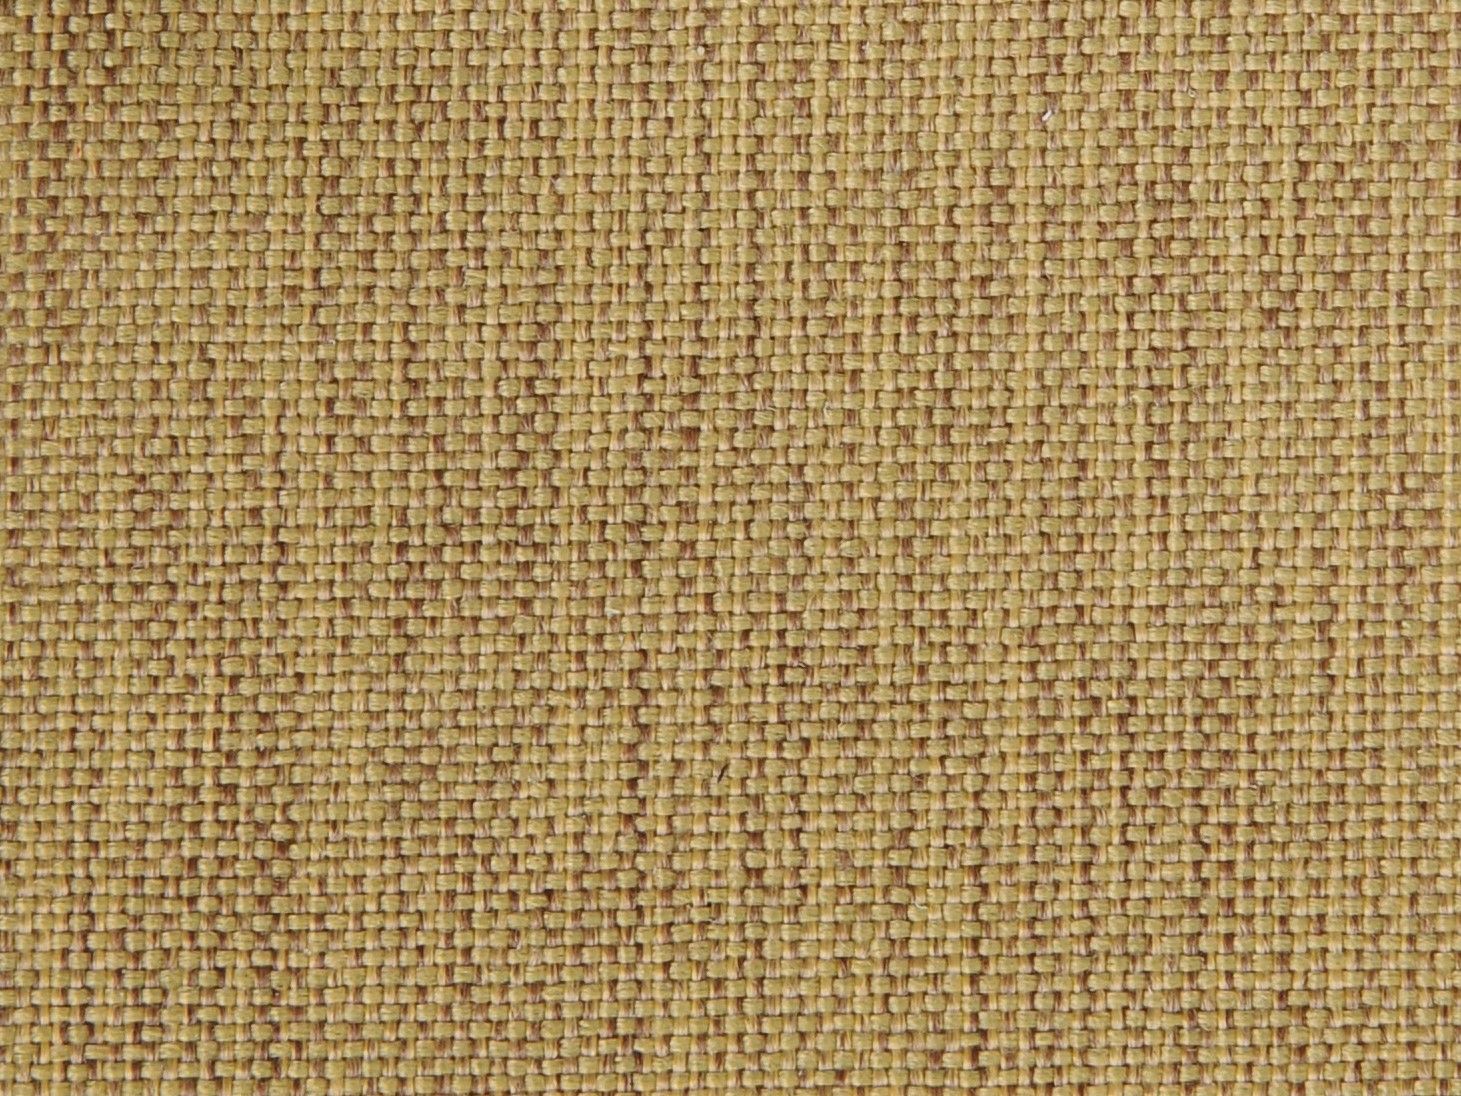 Linen - Albümlük Kumaş - Varan Tekstil Kalitesiyle